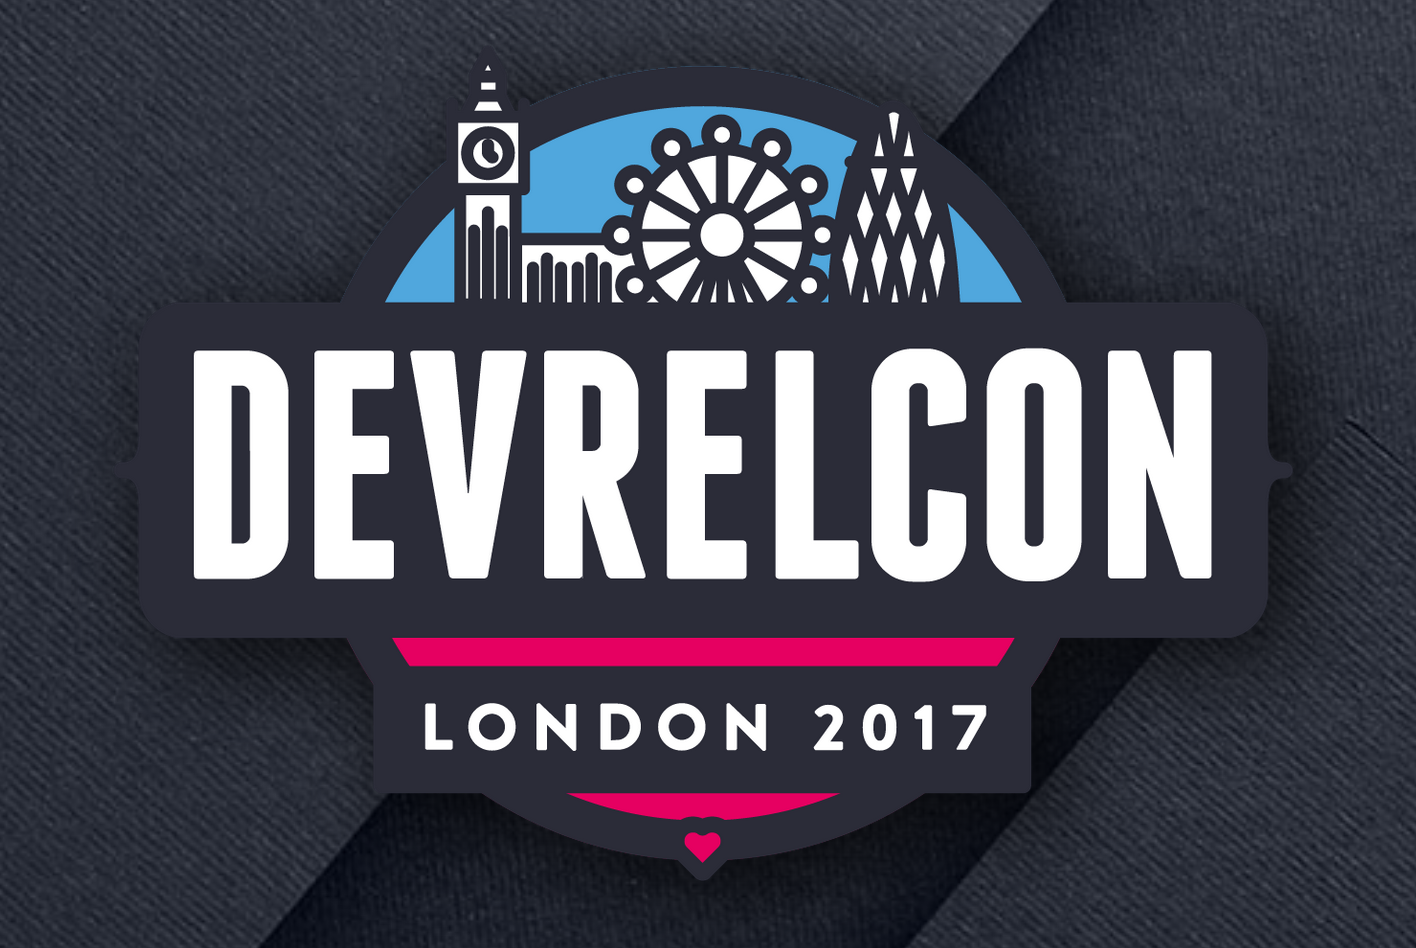 DevRelCon London